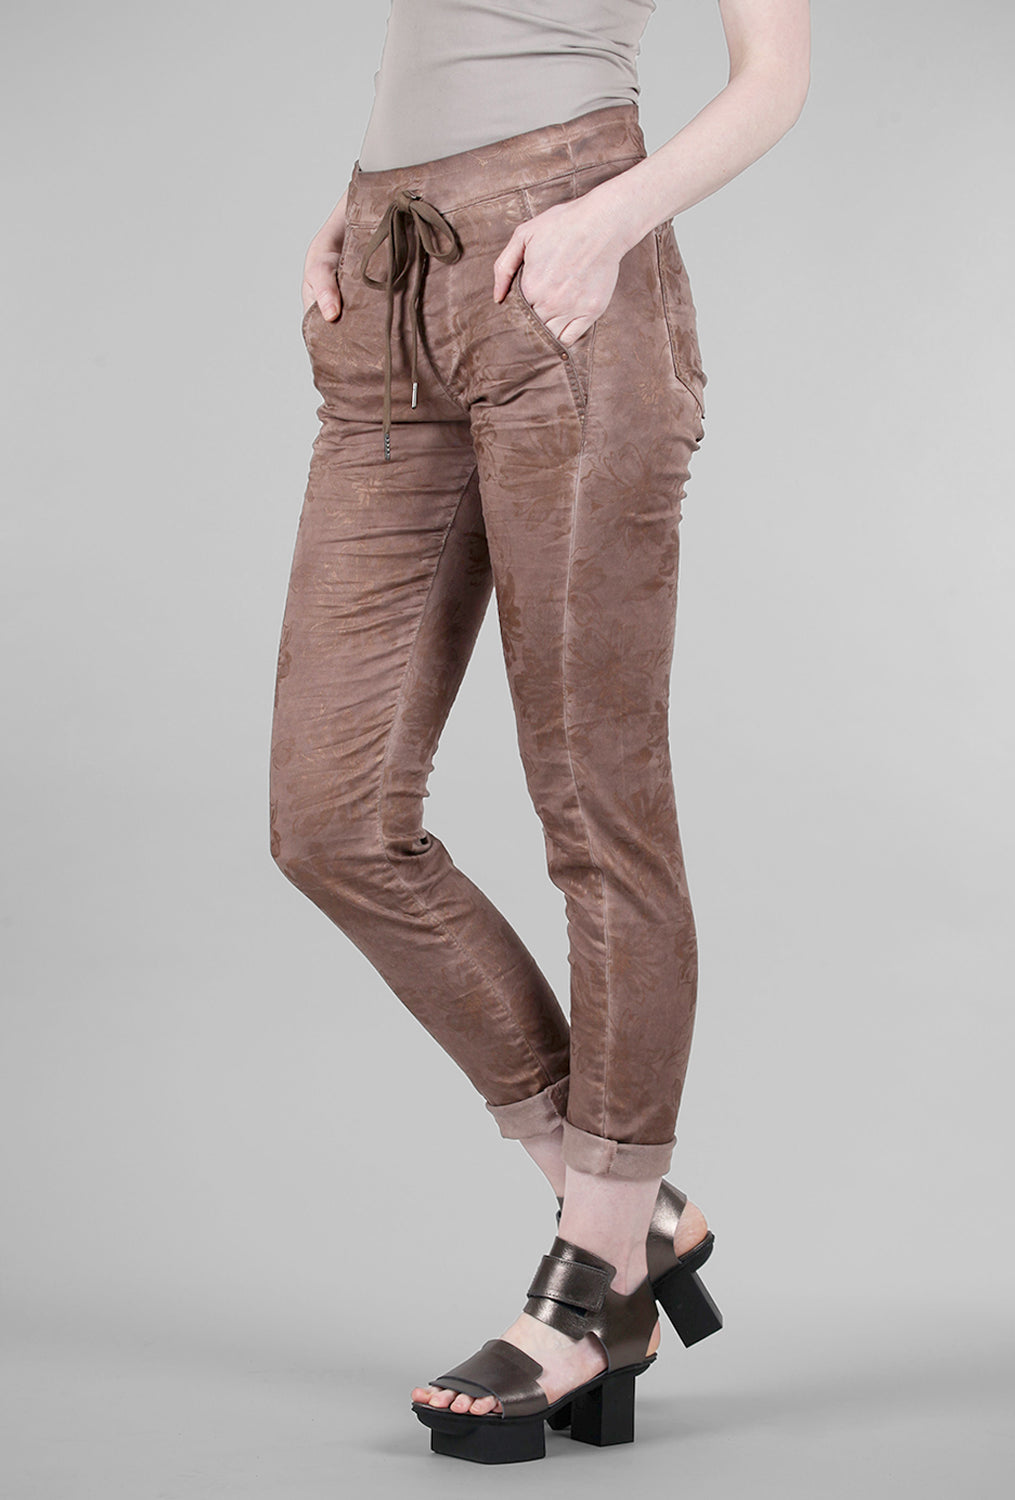 Alembika Iconic Stretch Jeans, Brown/Metallic 